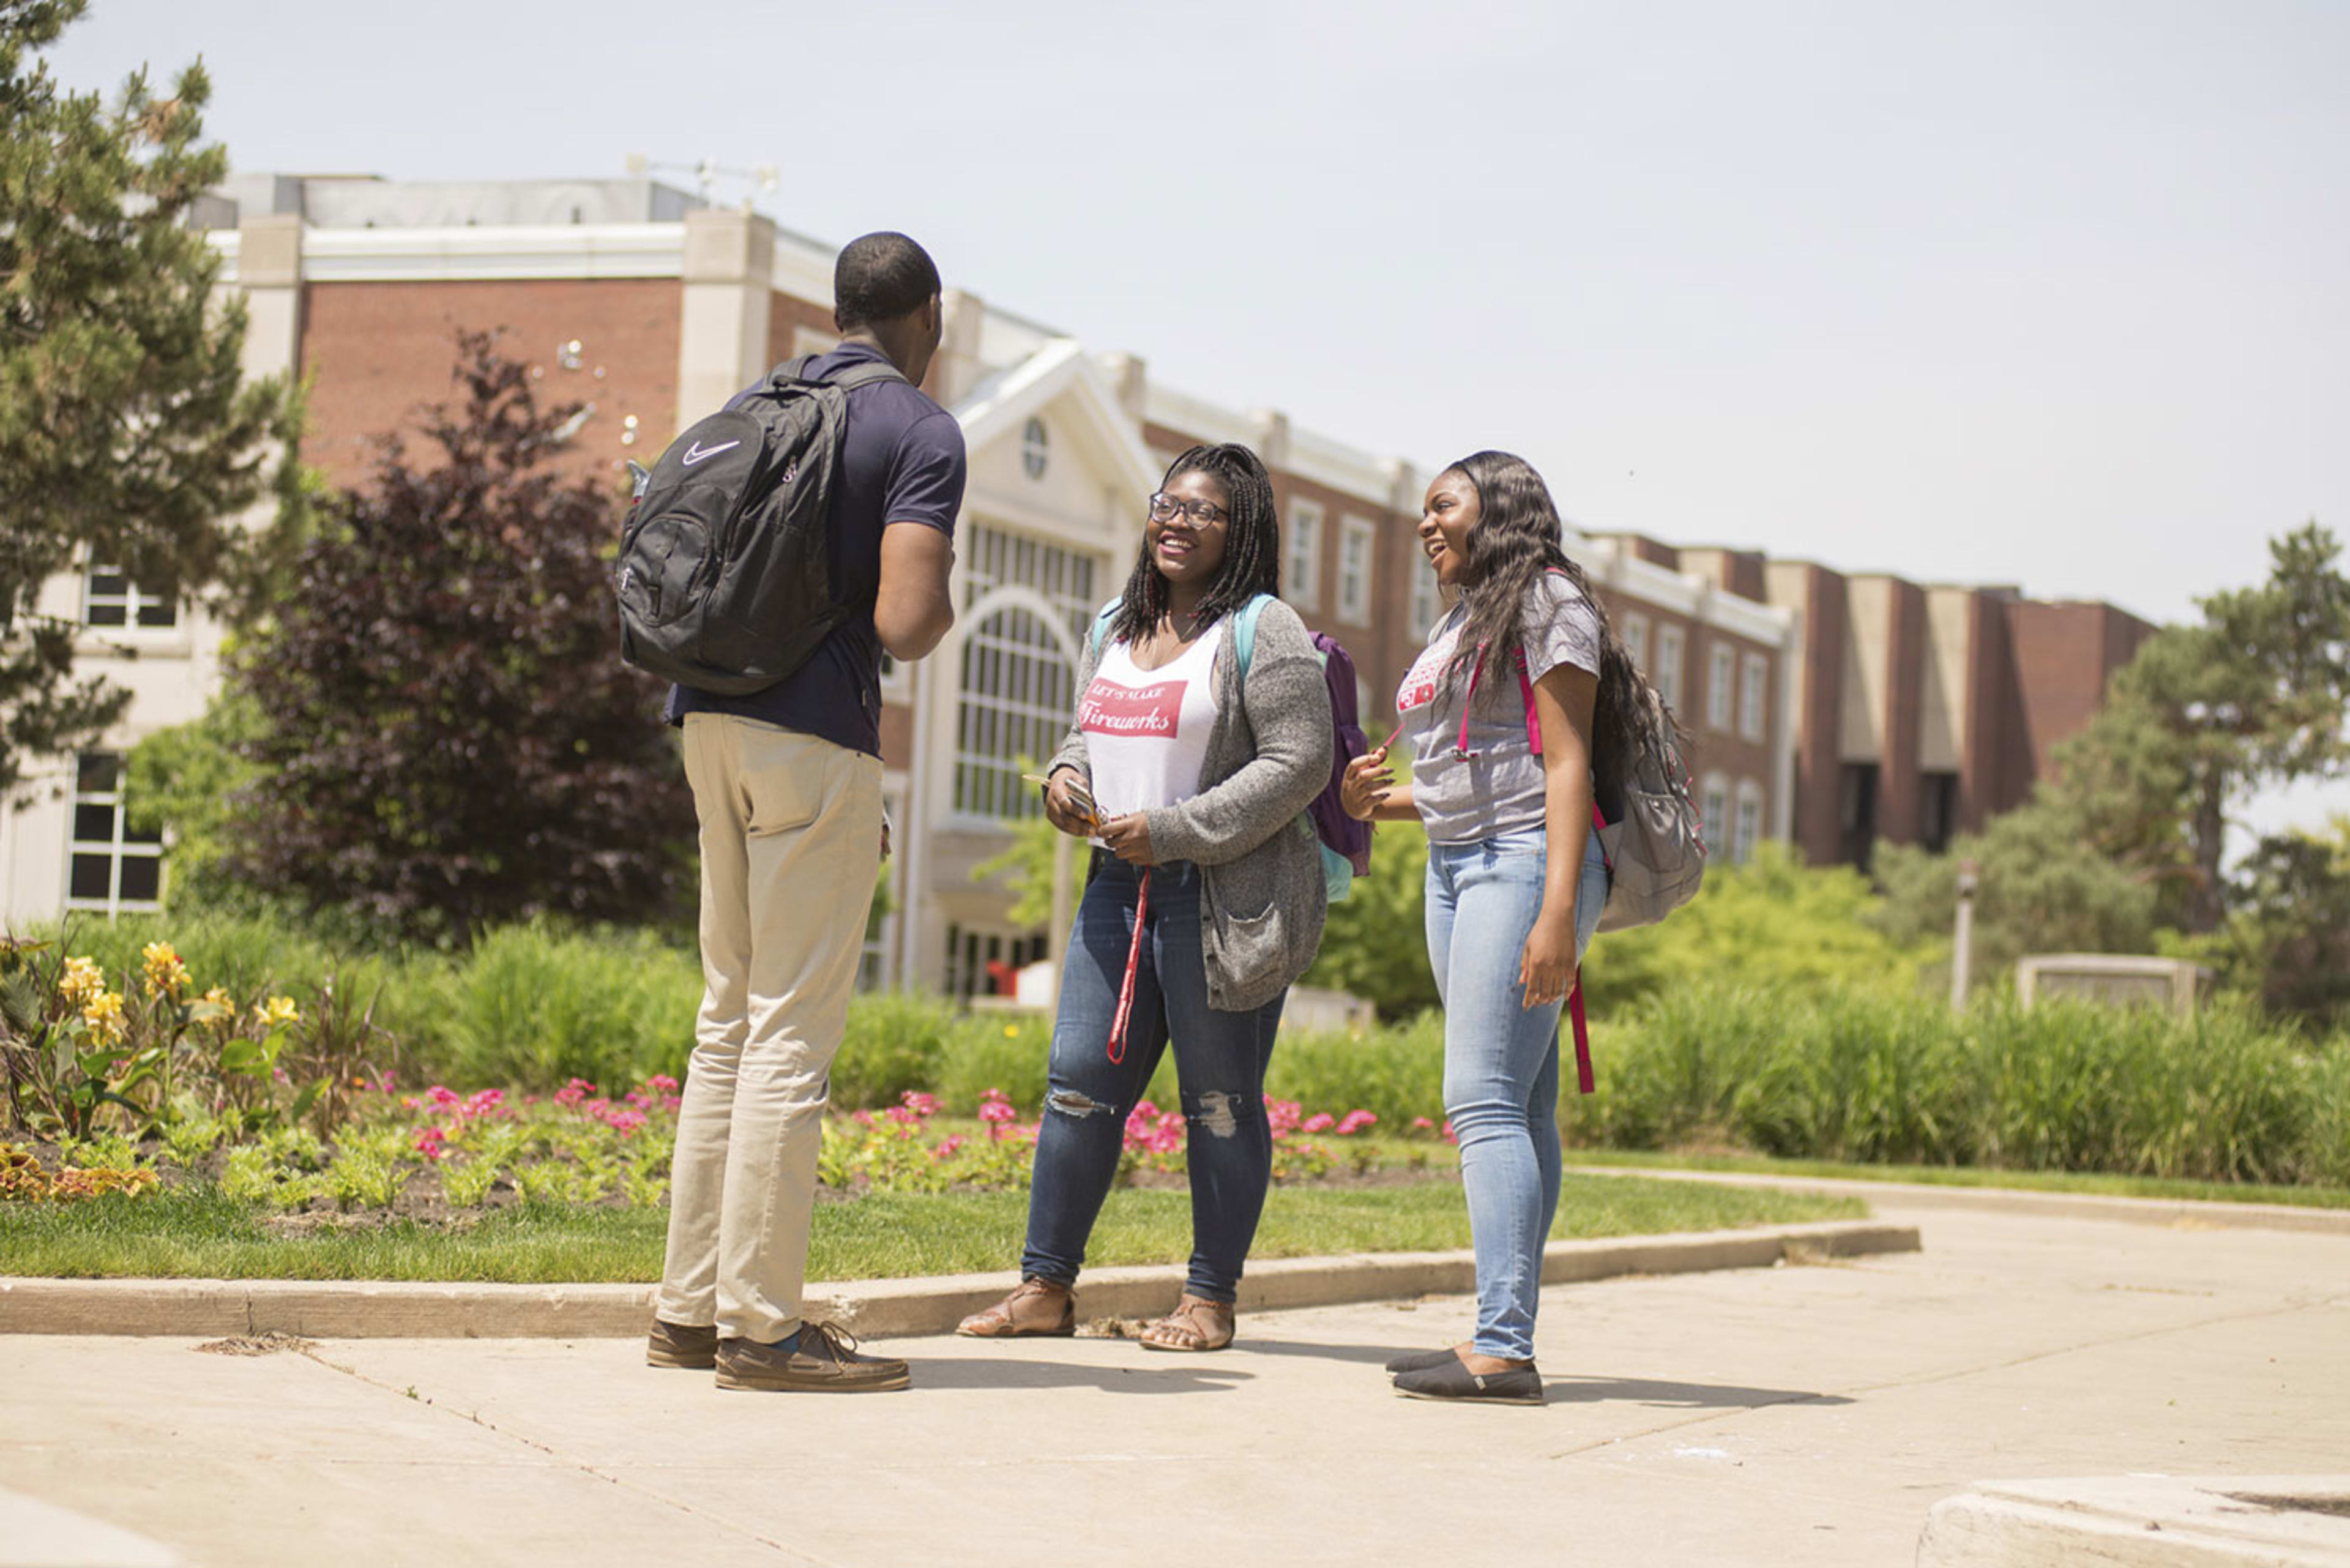 Students on campus at Illinois State University